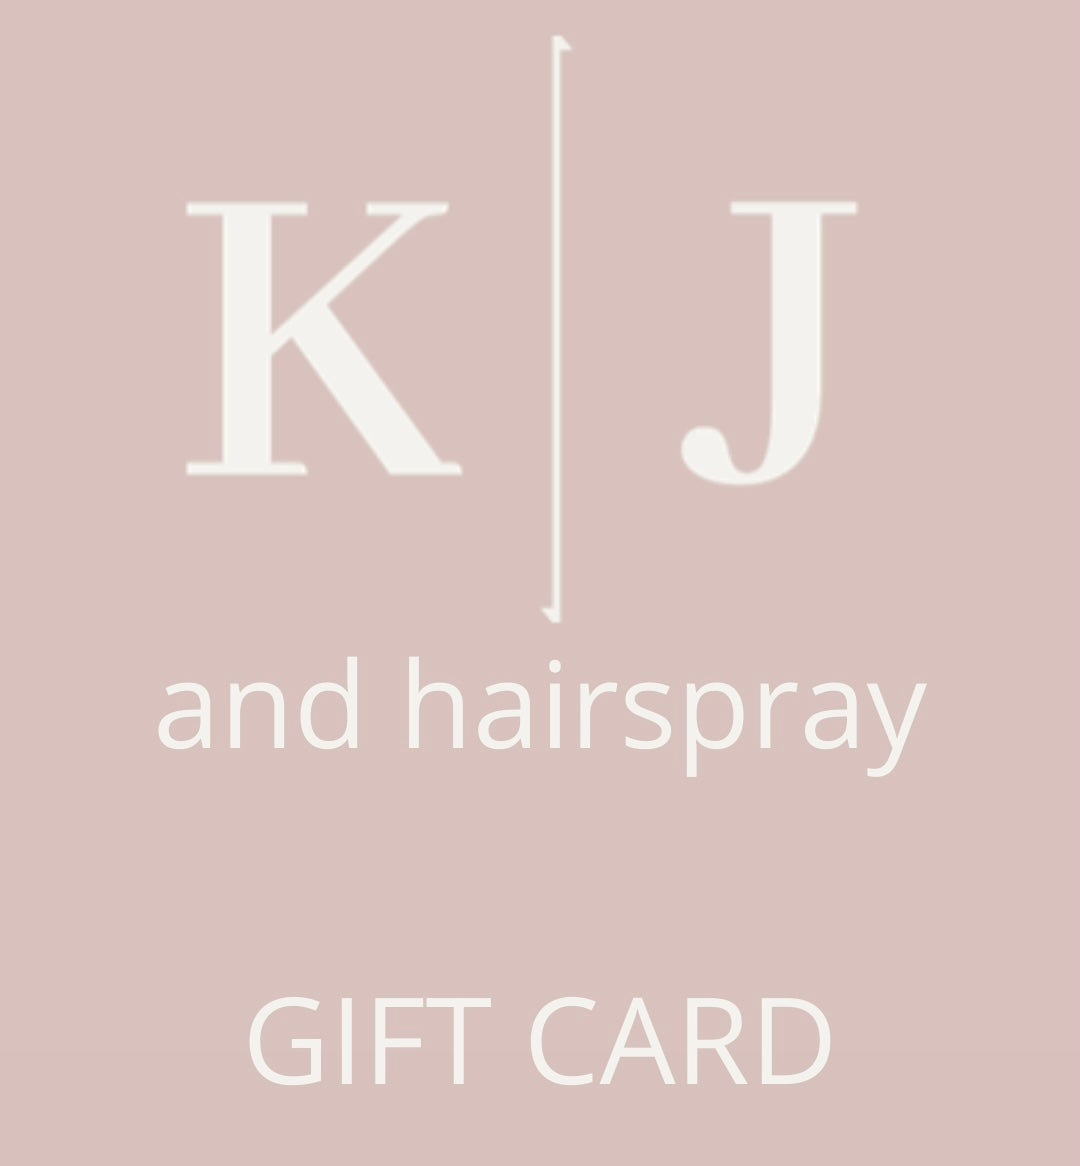 KJ and Hairspray E-Gift Card